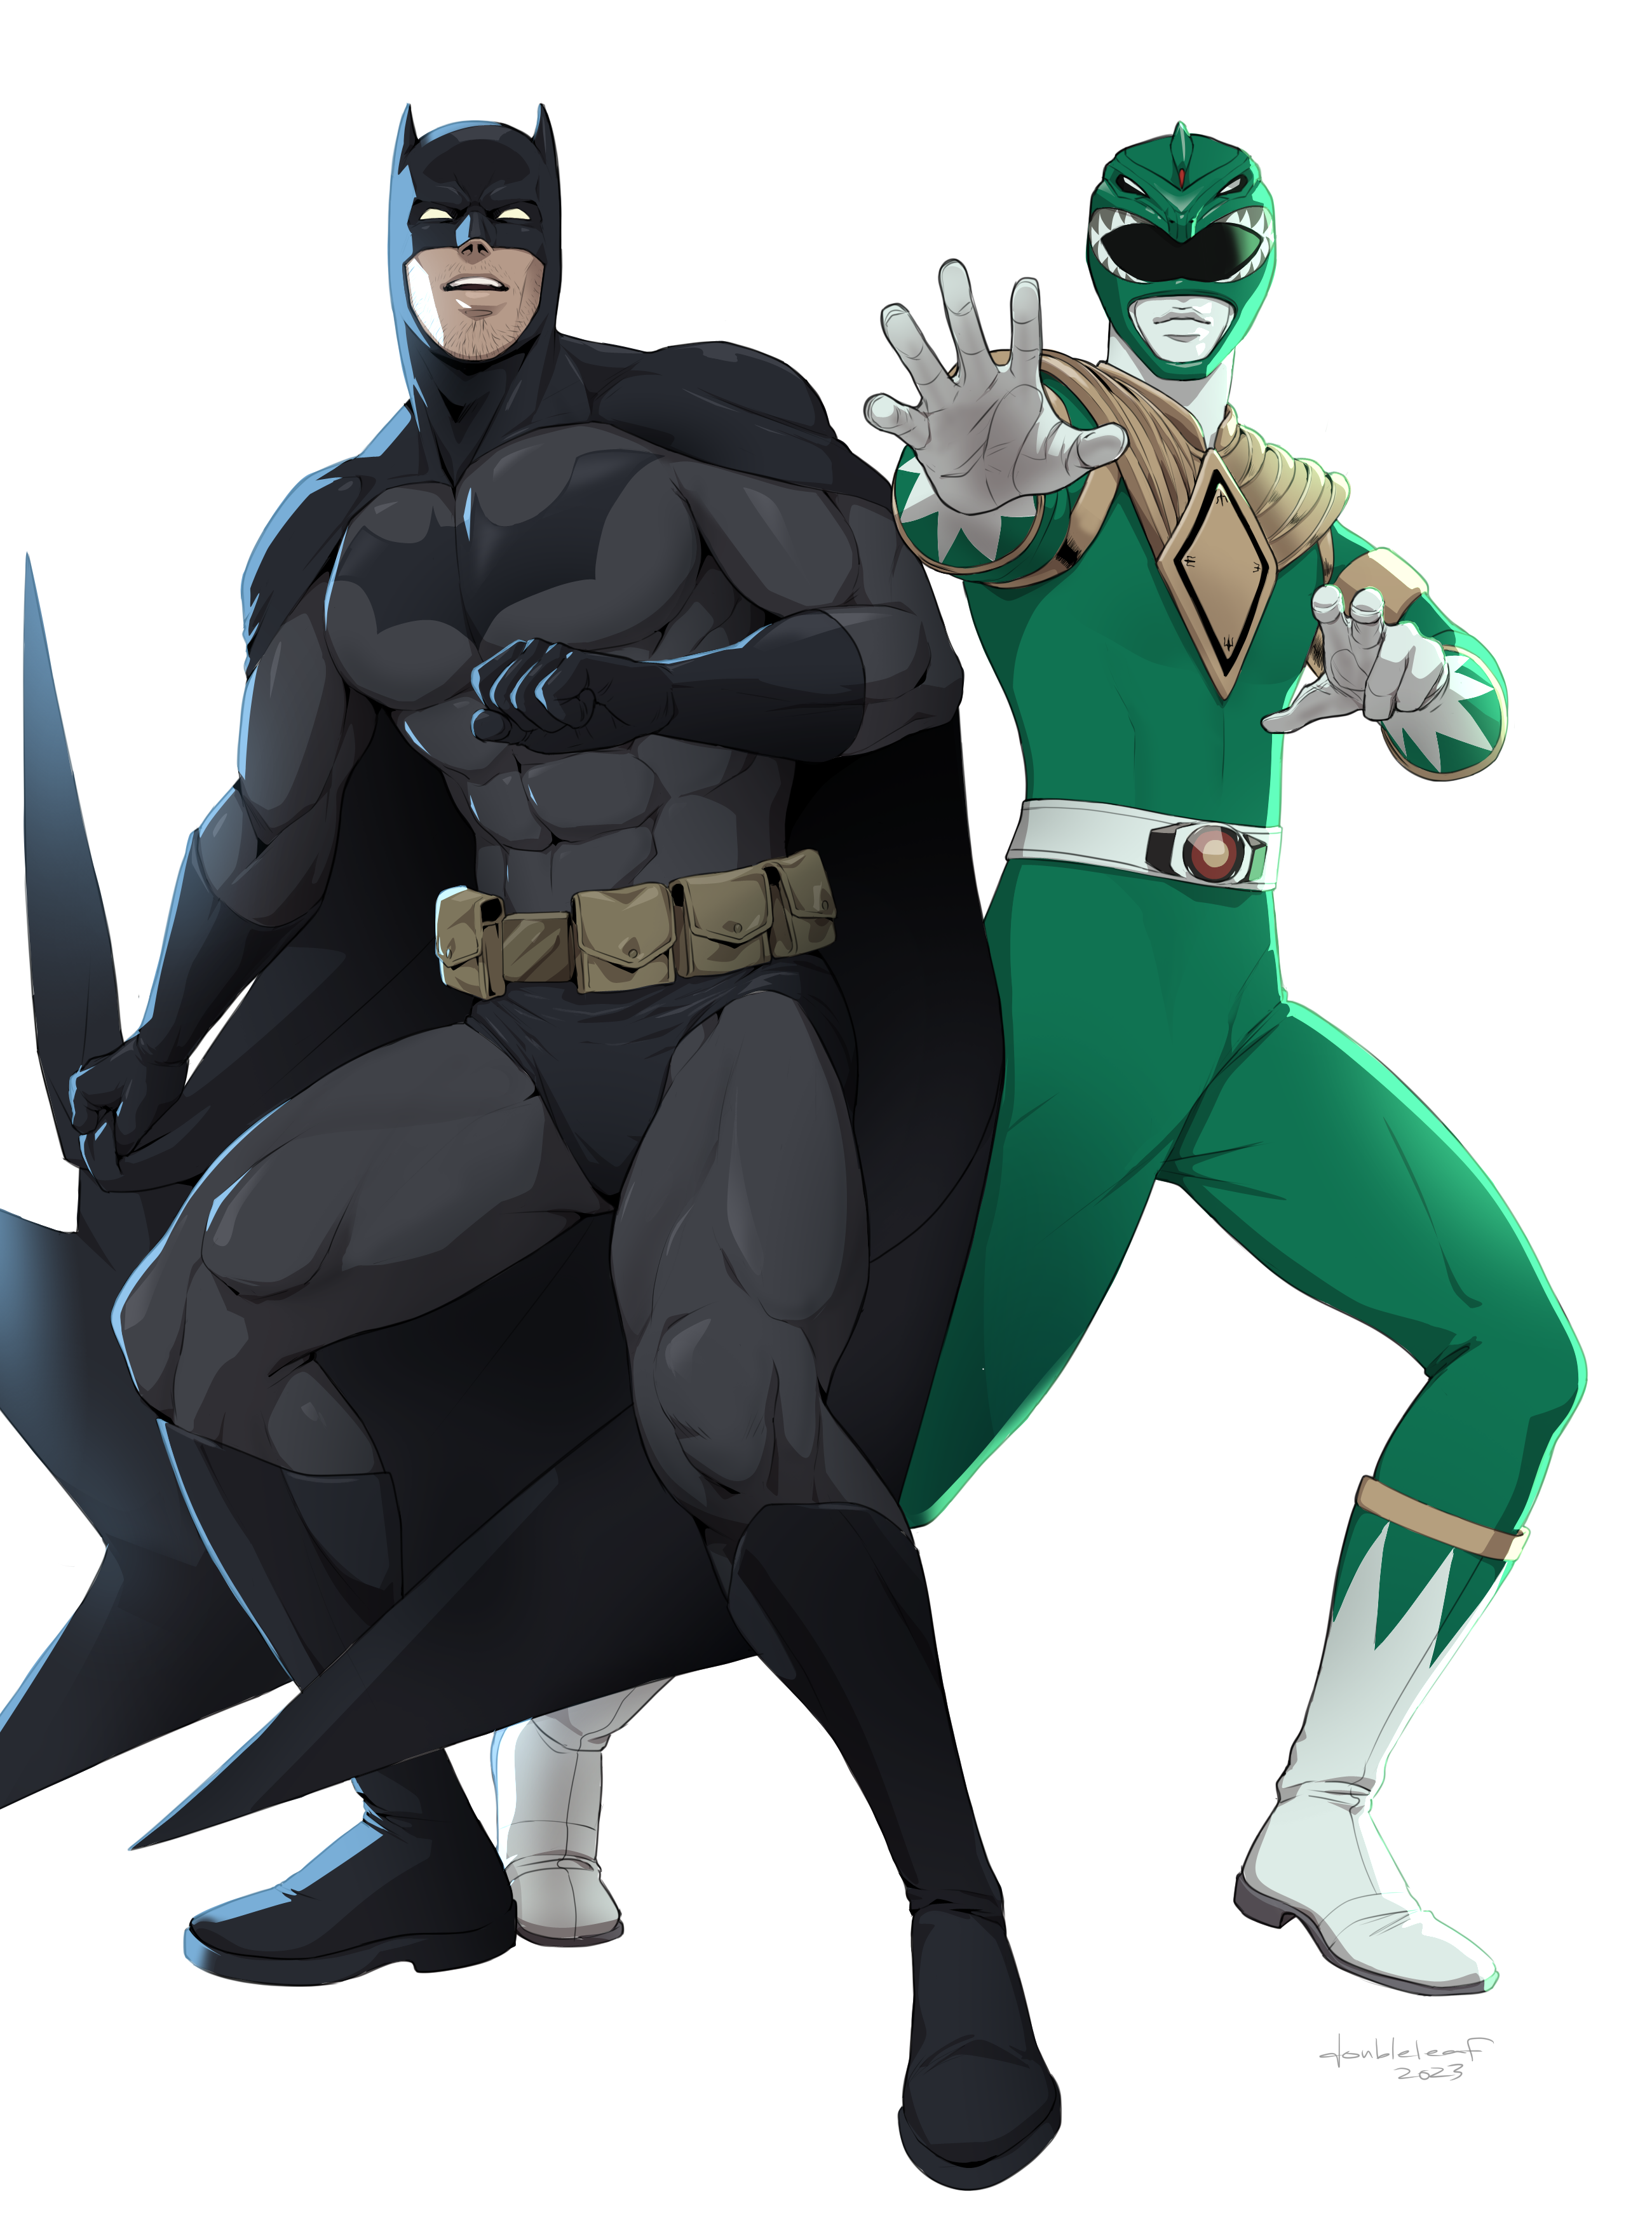 Batman and Green Ranger by doubleleaf on DeviantArt